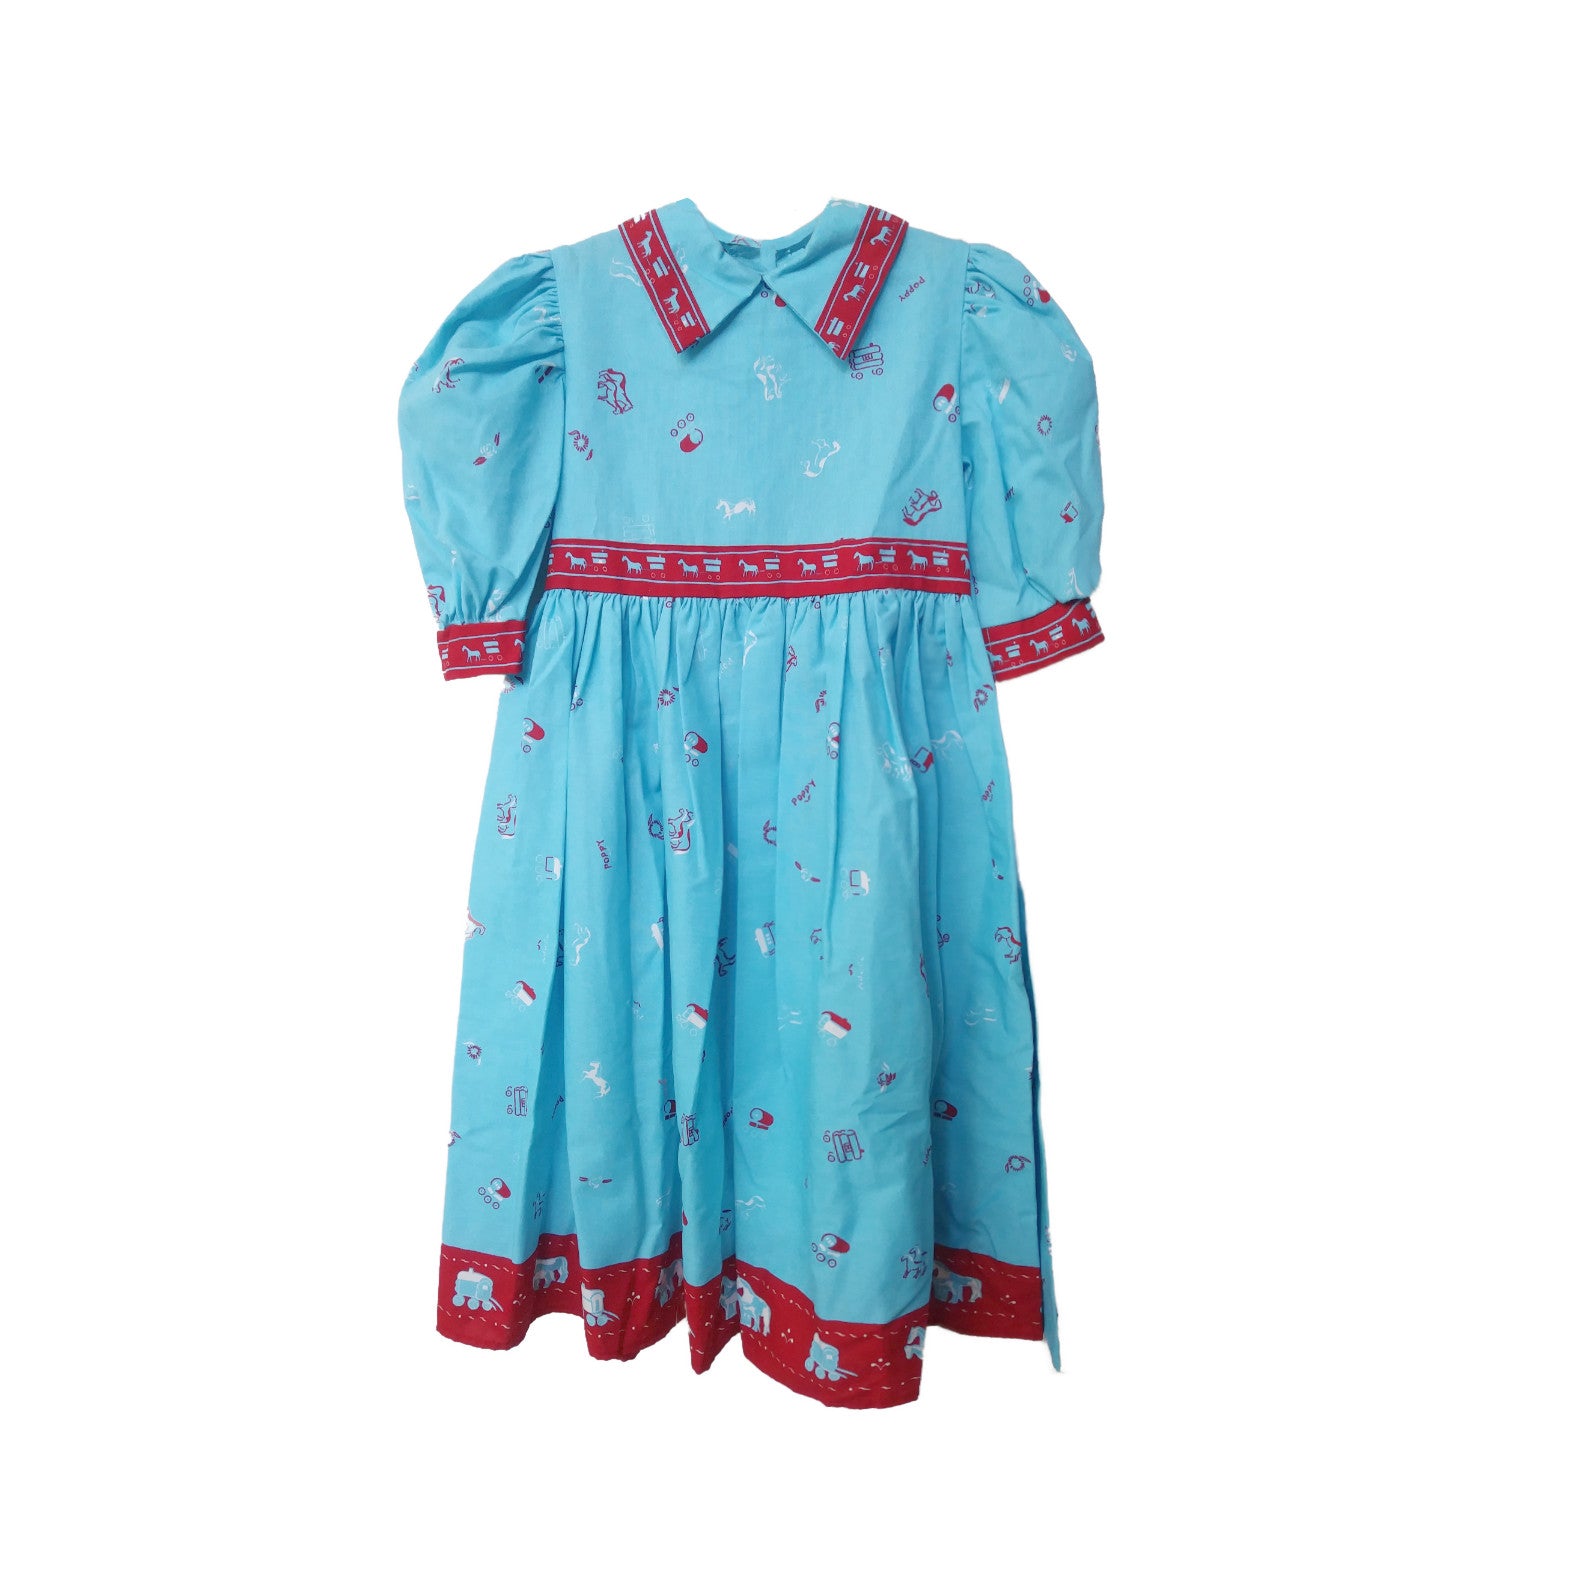 Archive Poppy - Charlie Dress - Turquoise Gypsy Caravan